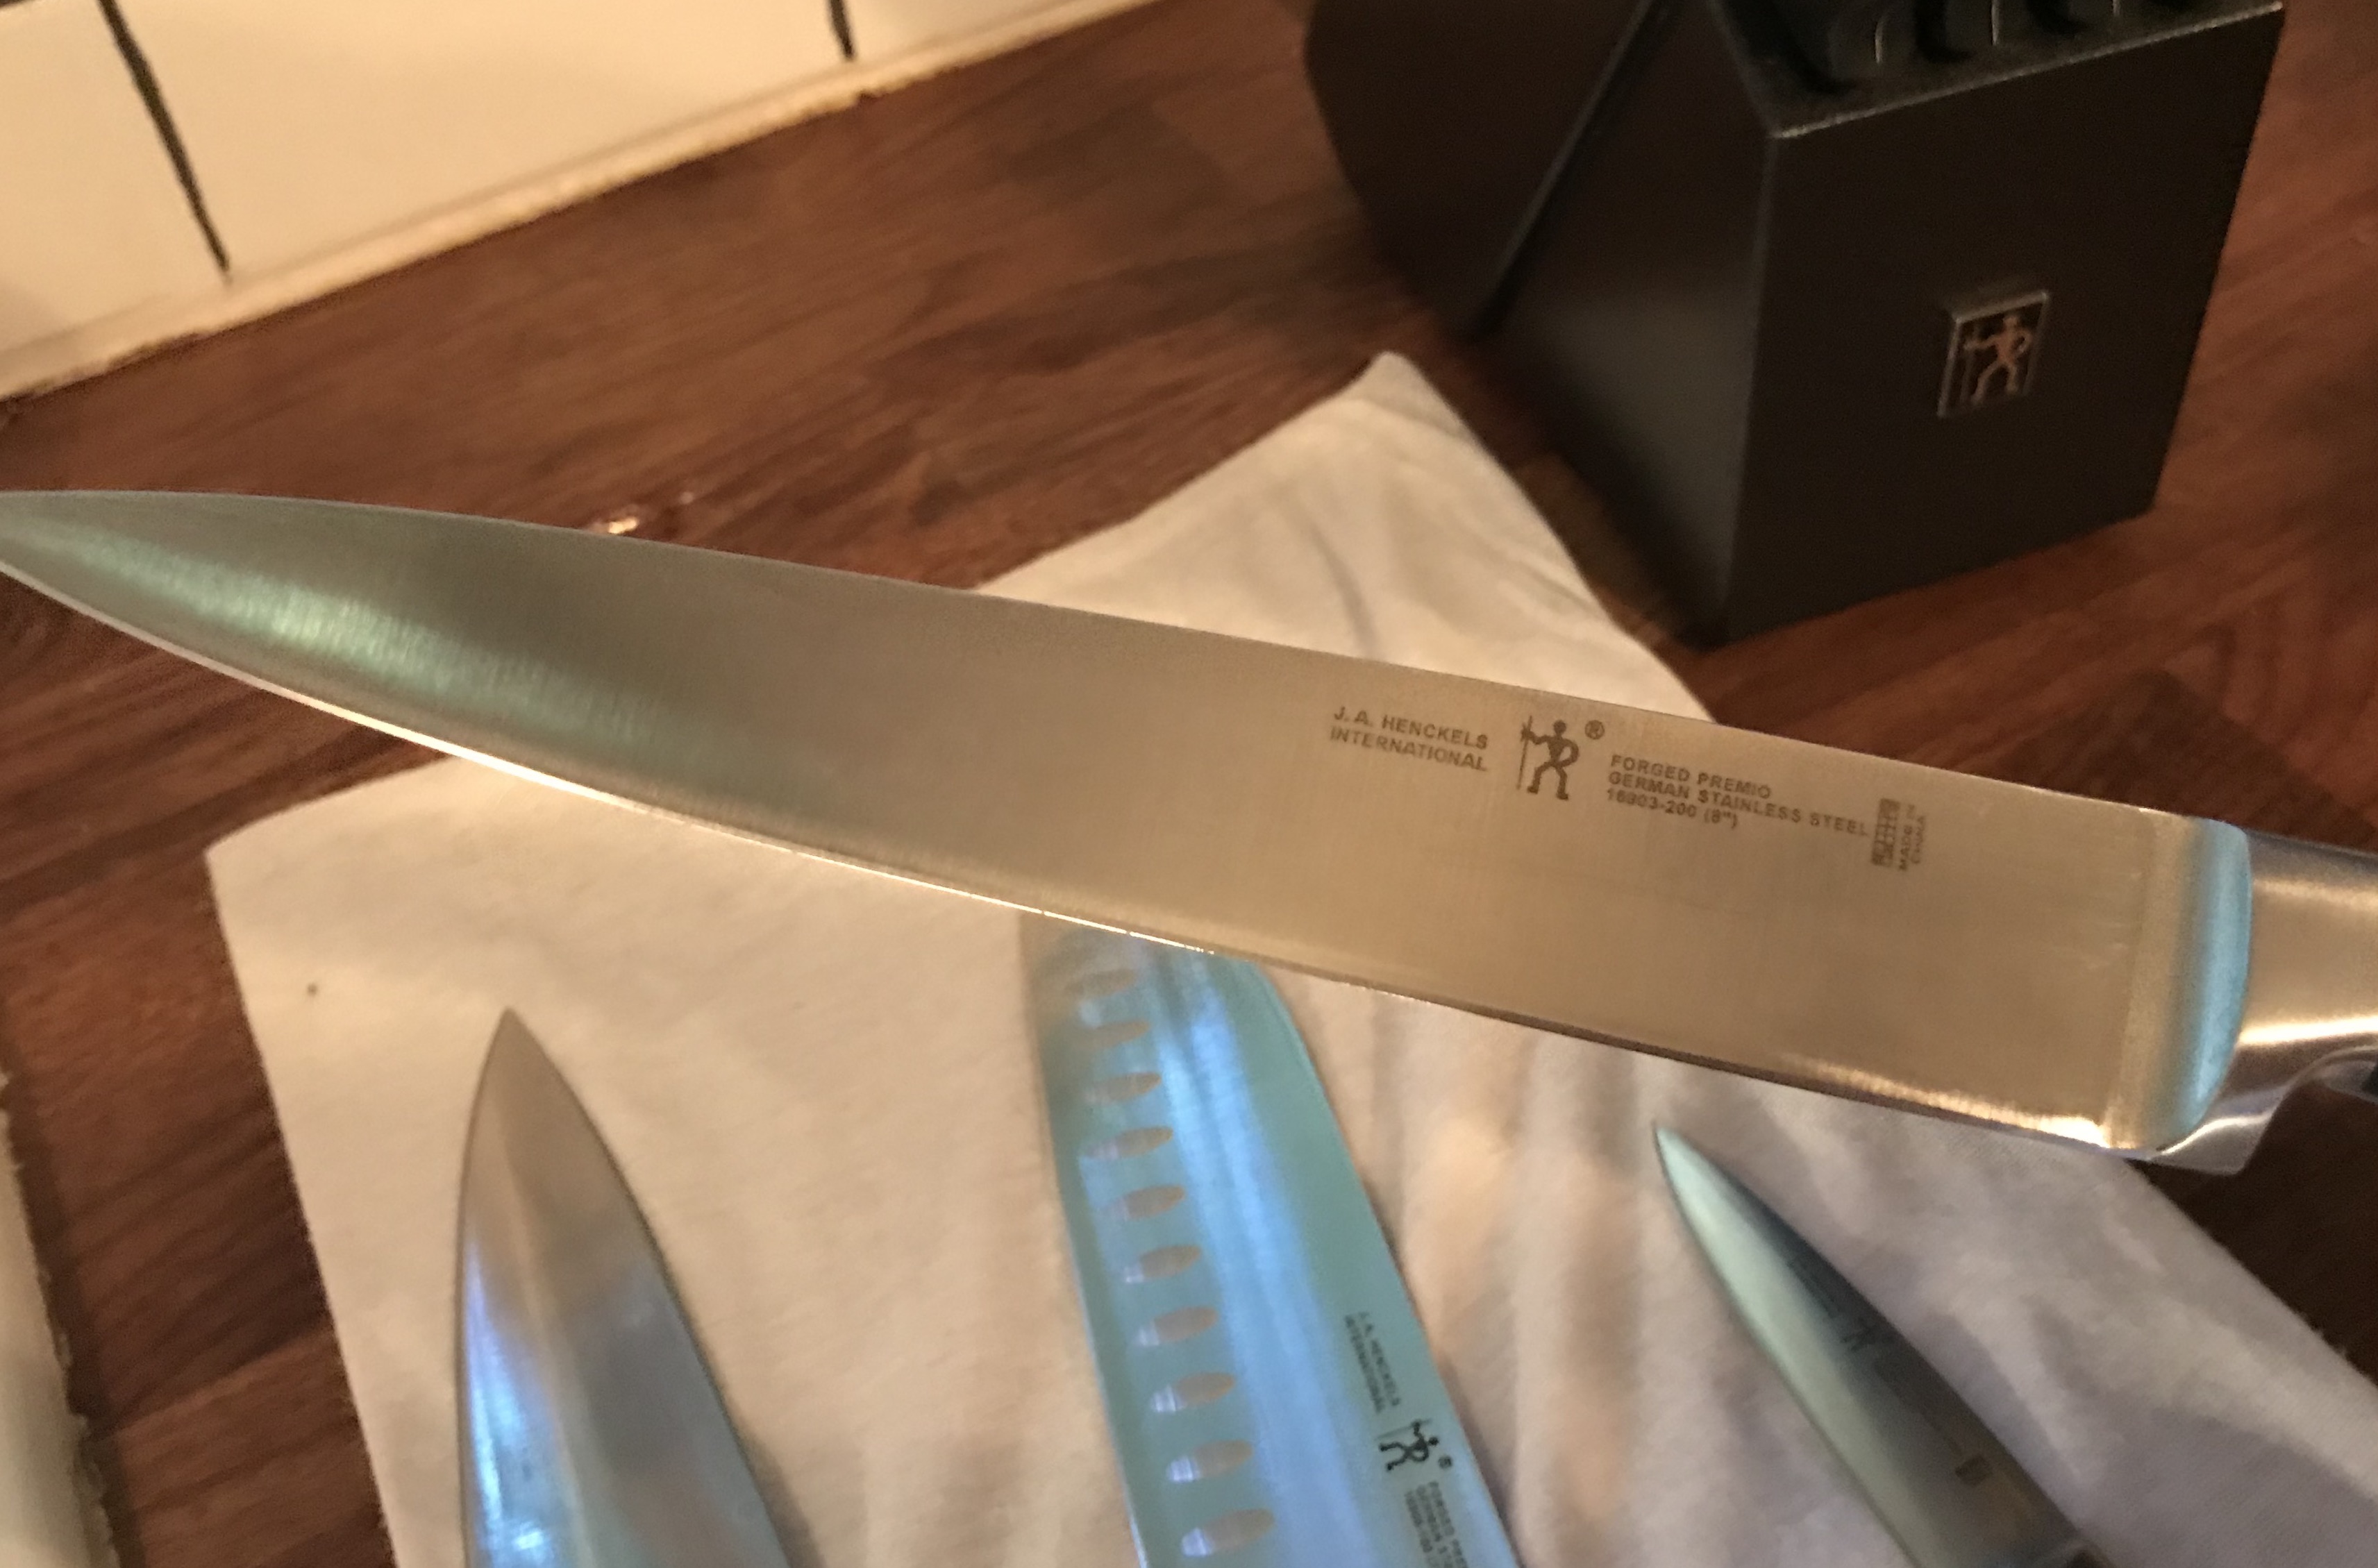 https://blog.bestbuy.ca/wp-content/uploads/2018/07/J.A.Henckels-Carving-Knife-review.jpg